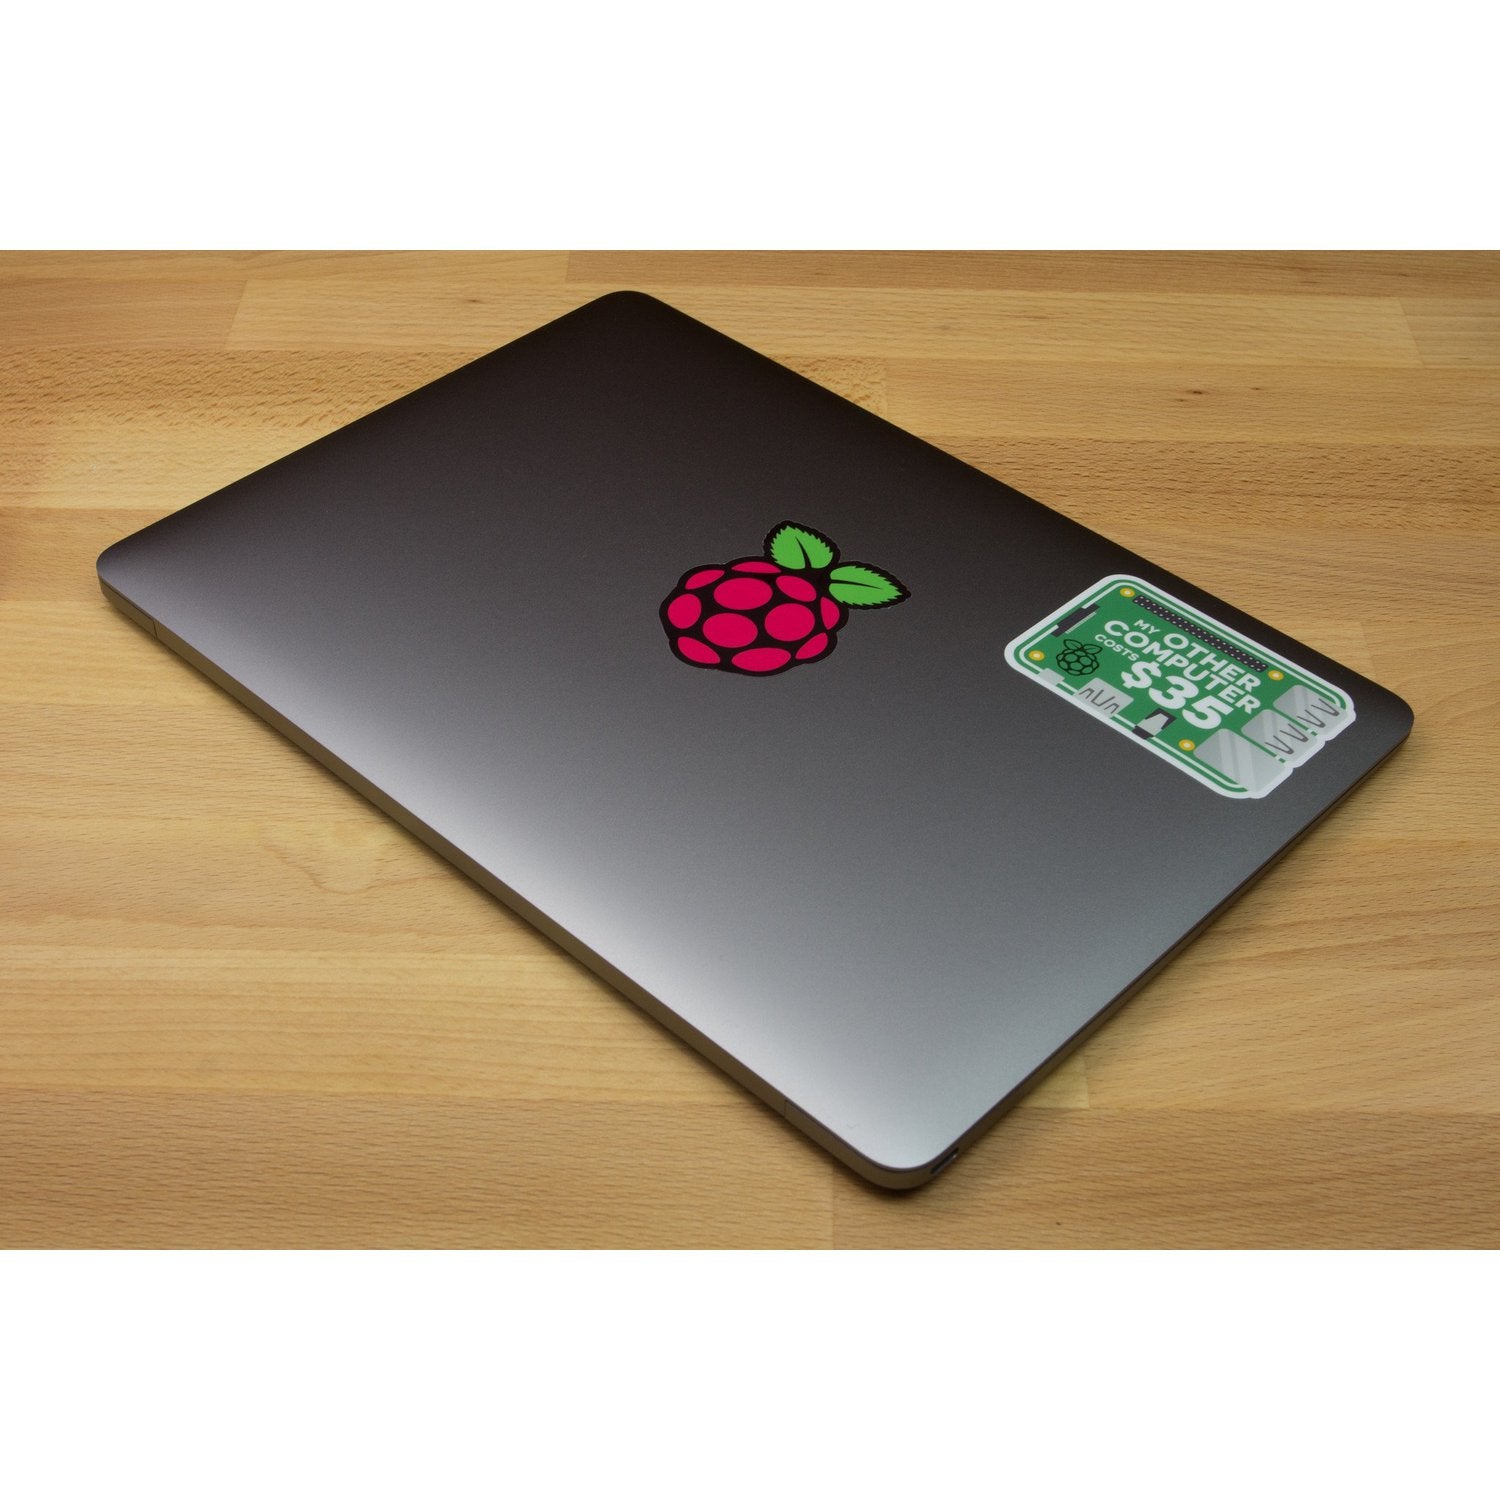 "My other computer..." Raspberry Pi Sticker